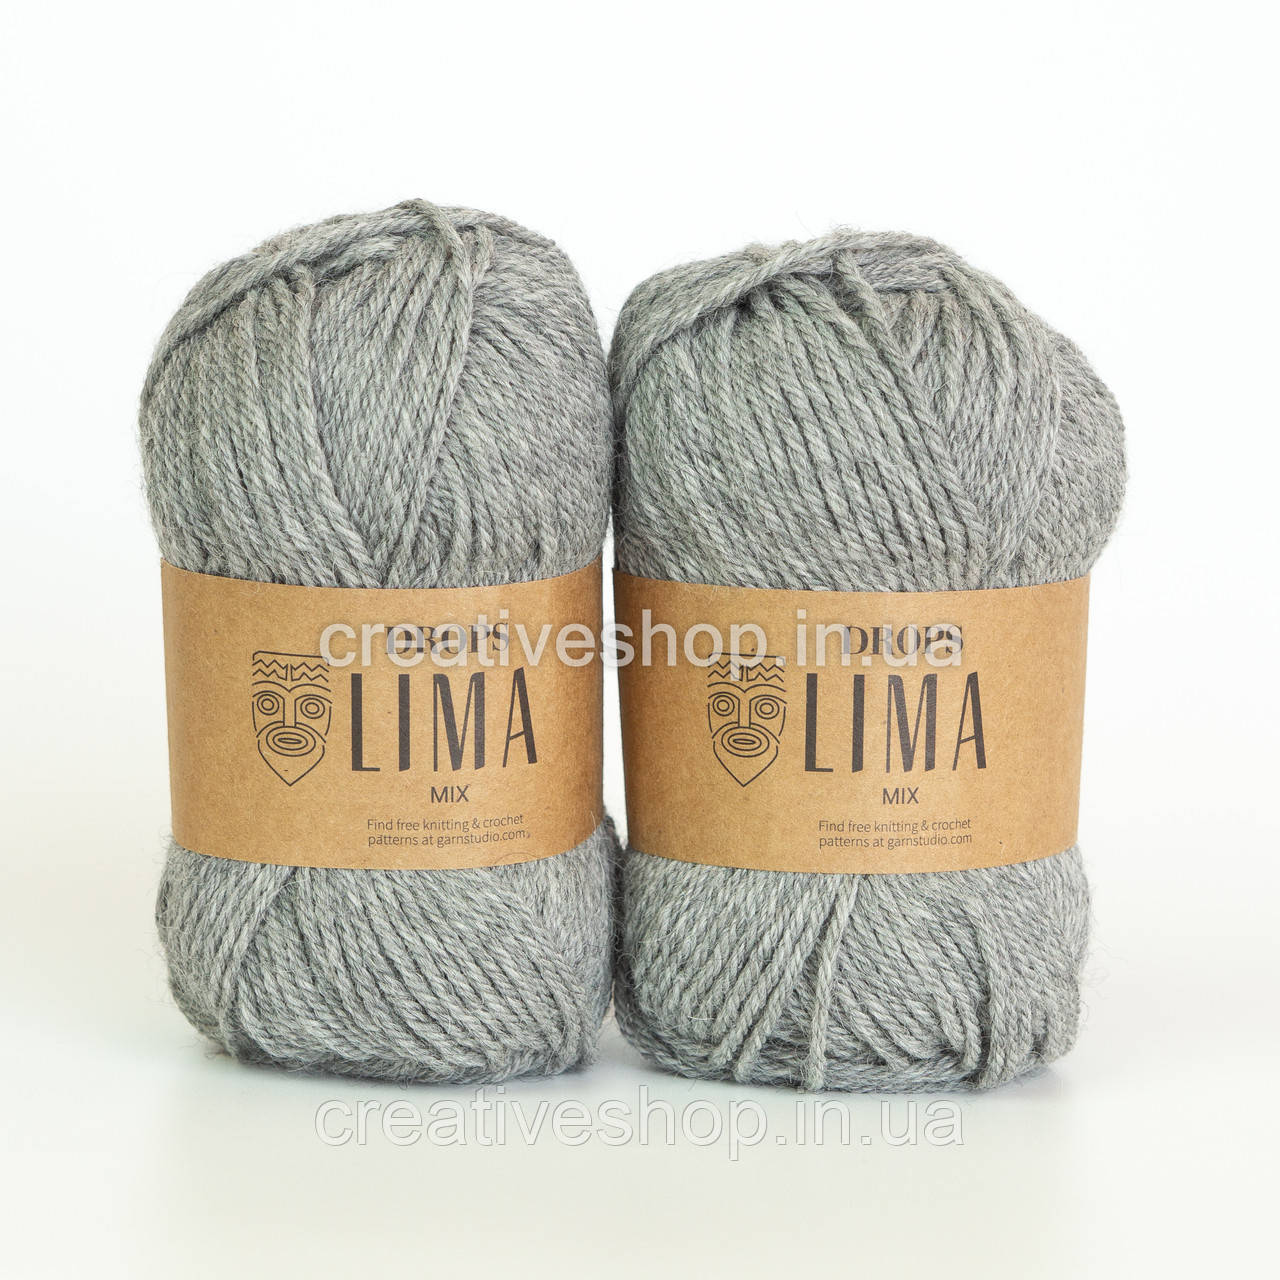 Пряжа Drops Lima Mix (колір 9015 grey)